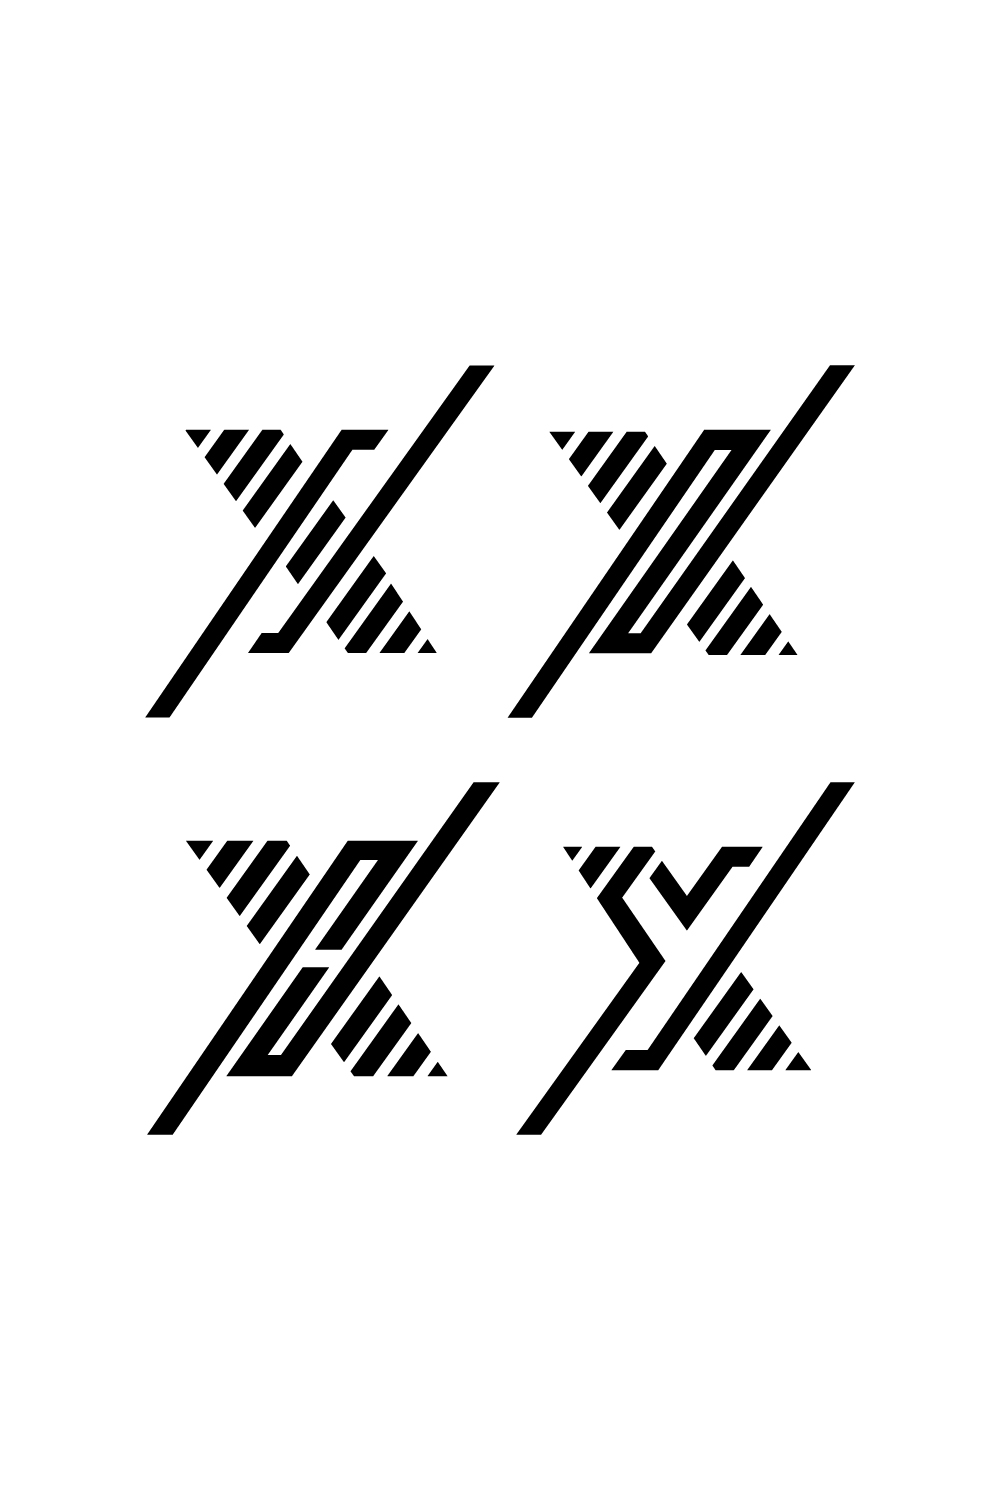 Set of letter X miniaml shape logo design concept isolated on balck White background pinterest preview image.